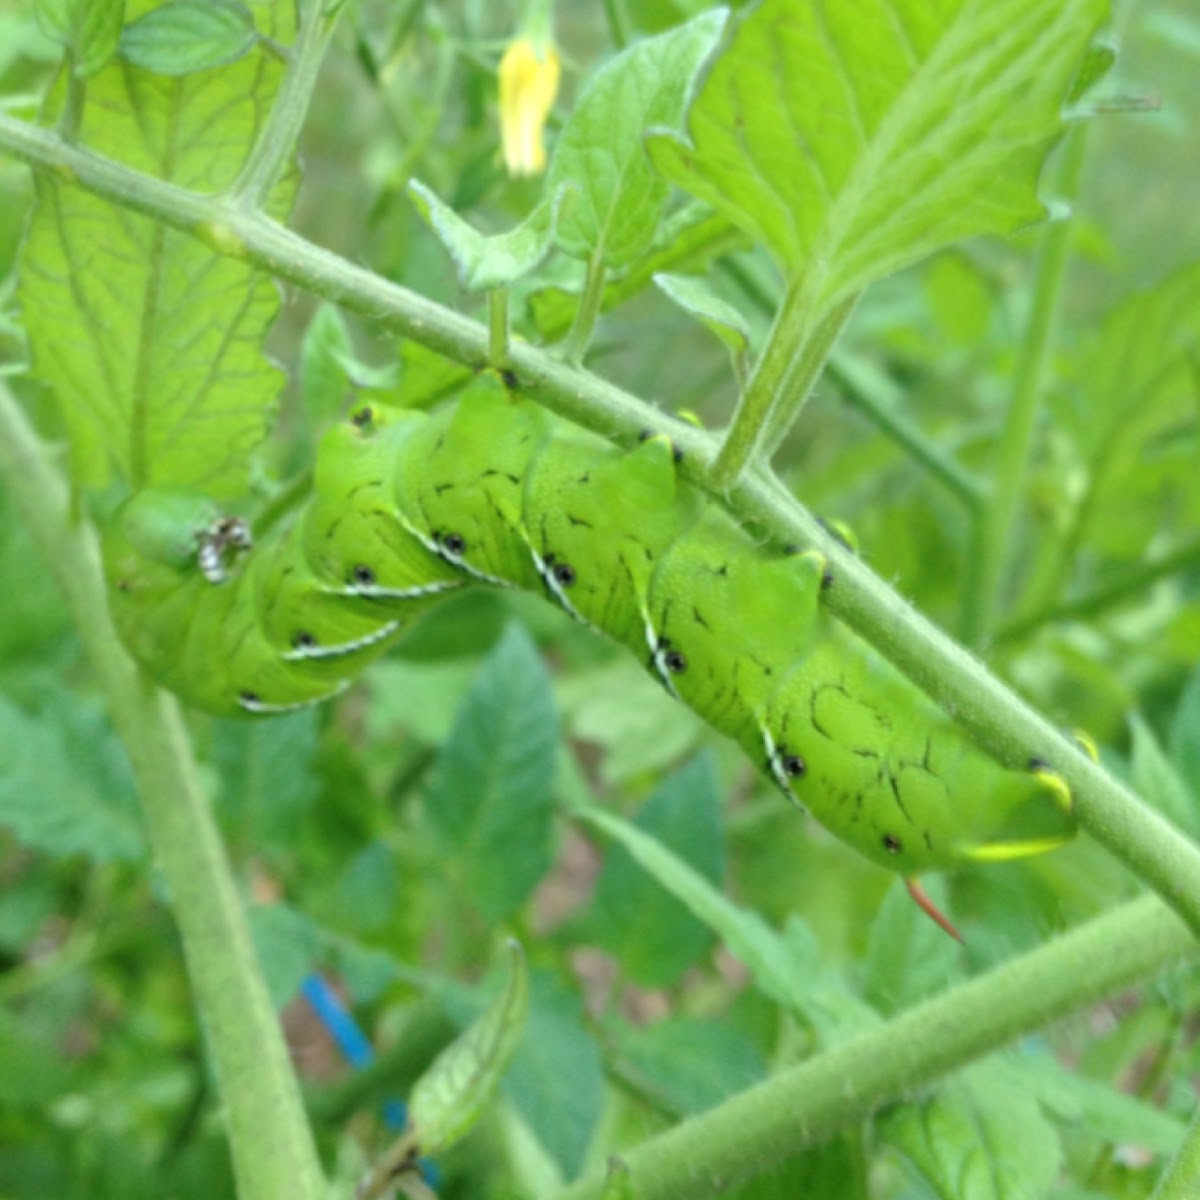 Tobacco hornworm (caterpillar)